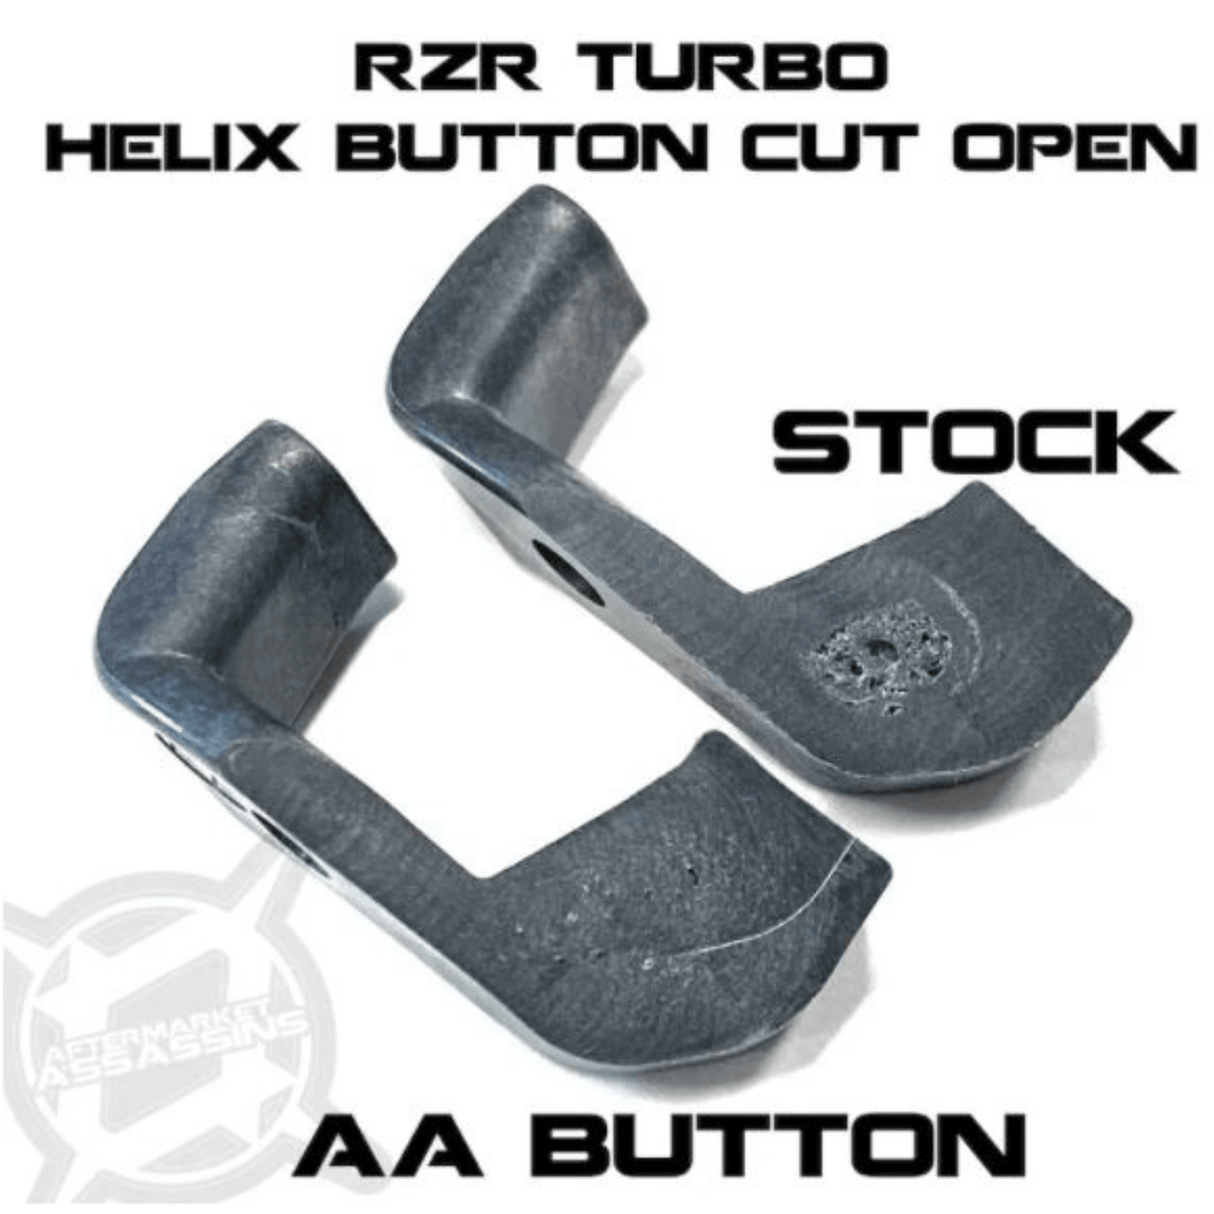 Polaris RZR Turbo Extreme HD Clutch Rebuild Kit (2017-2020) - R1 Industries